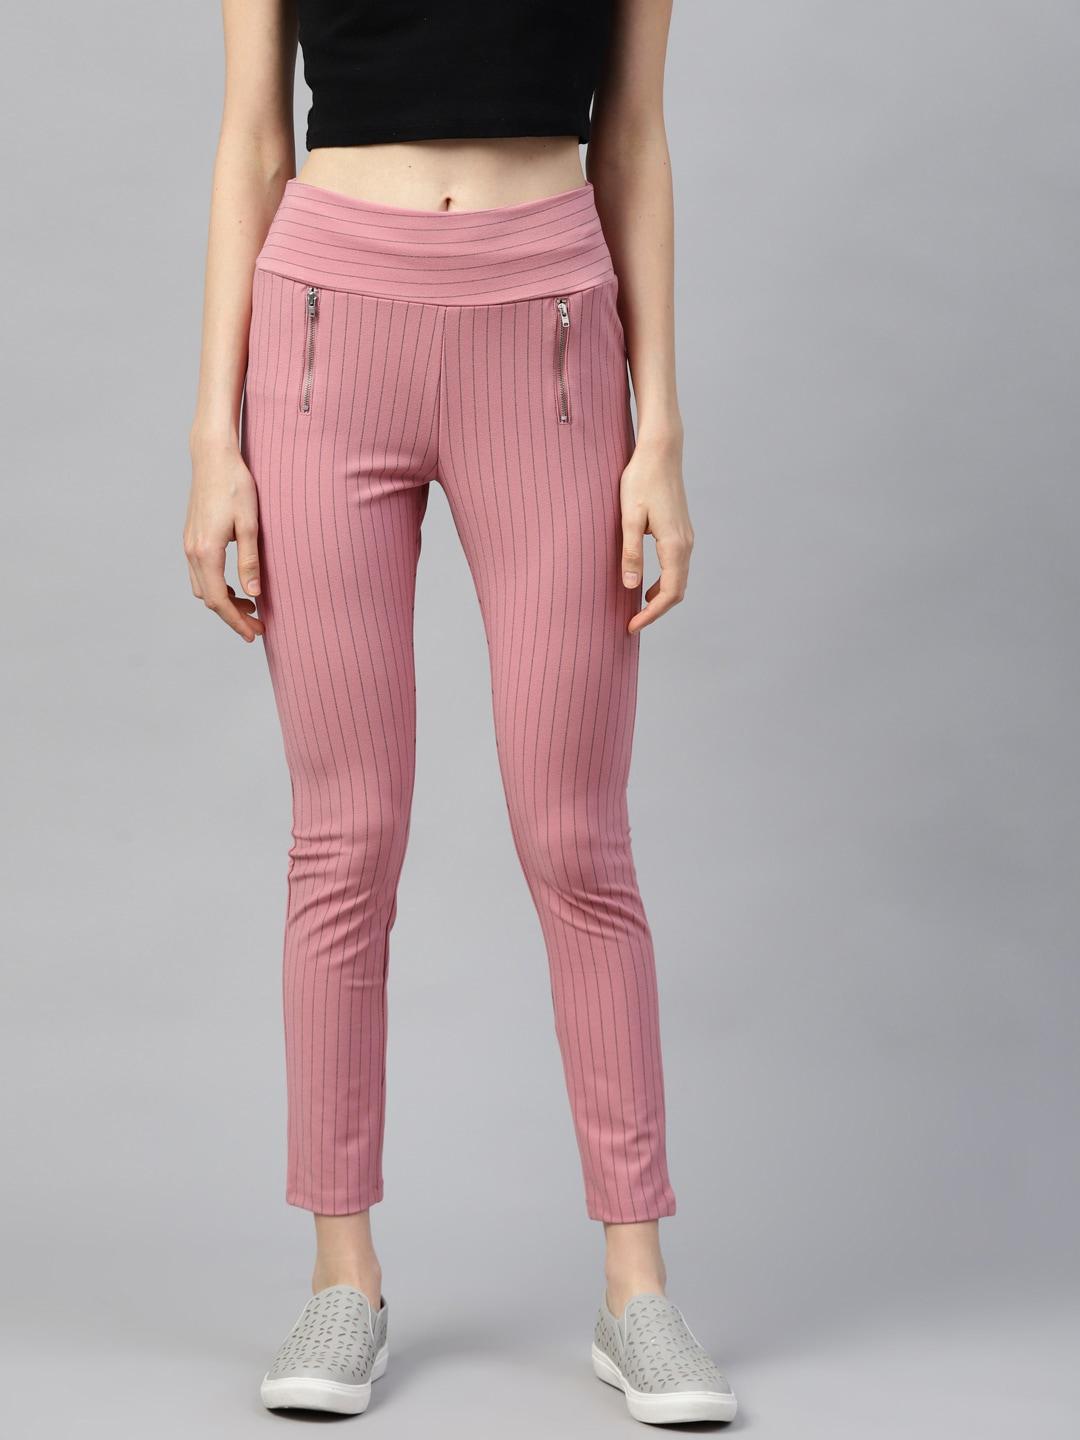 sassafras-women-pink-&-black-striped-slim-fit-jeggings